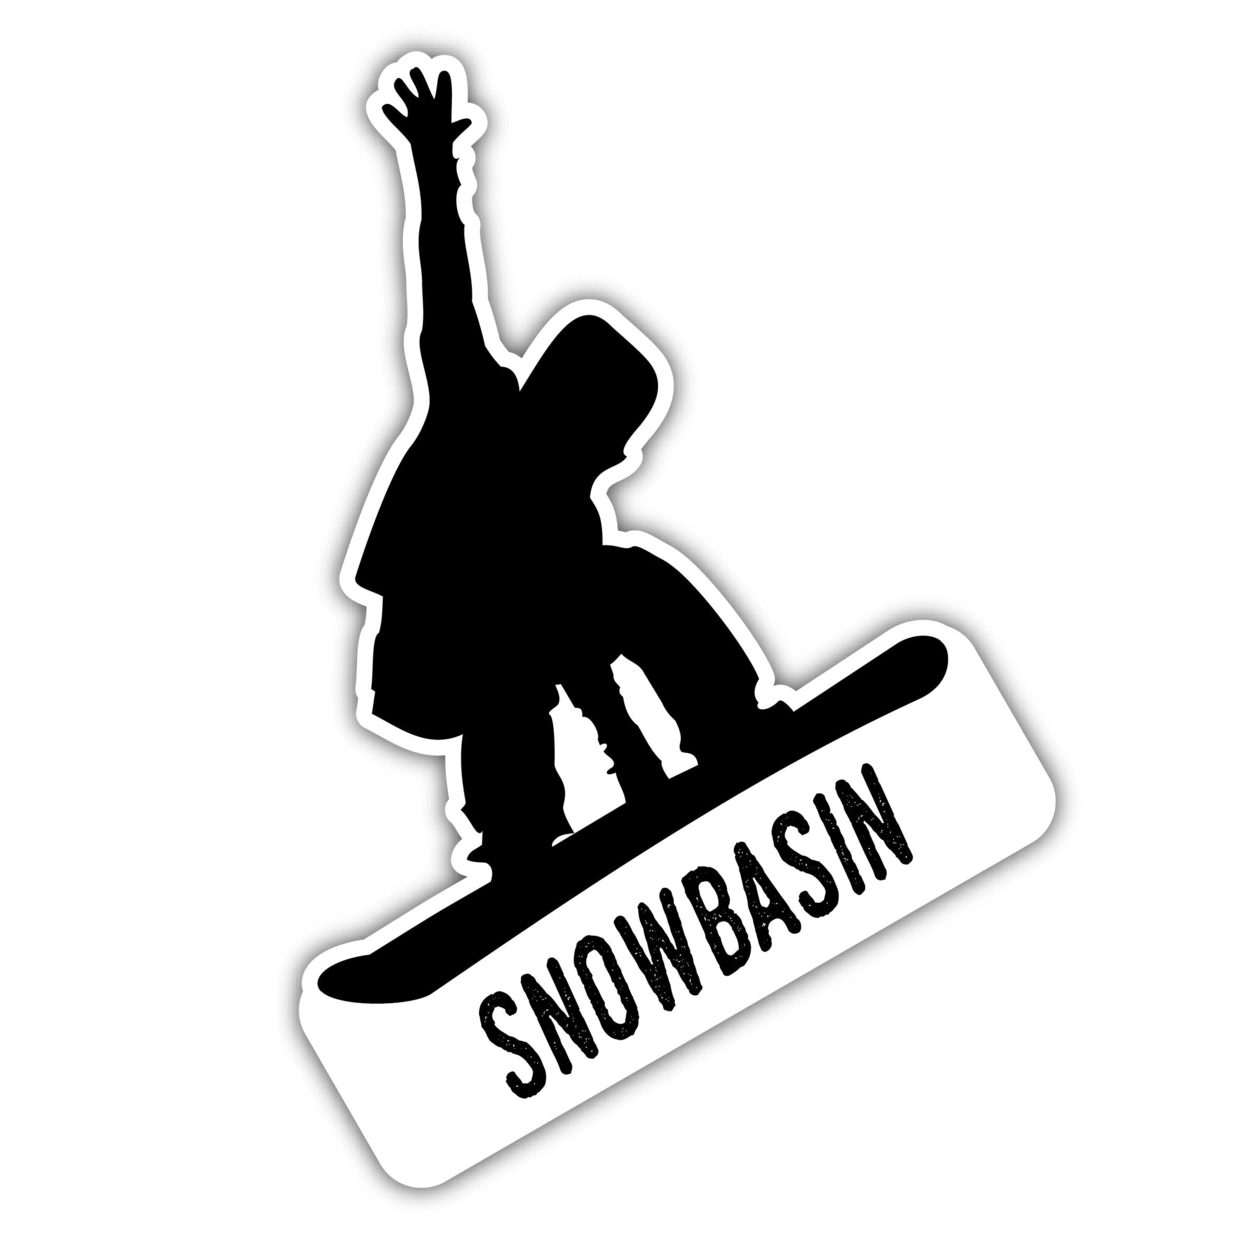 Snowbasin Utah Ski Adventures Souvenir 4 Inch Vinyl Decal Sticker Board Design